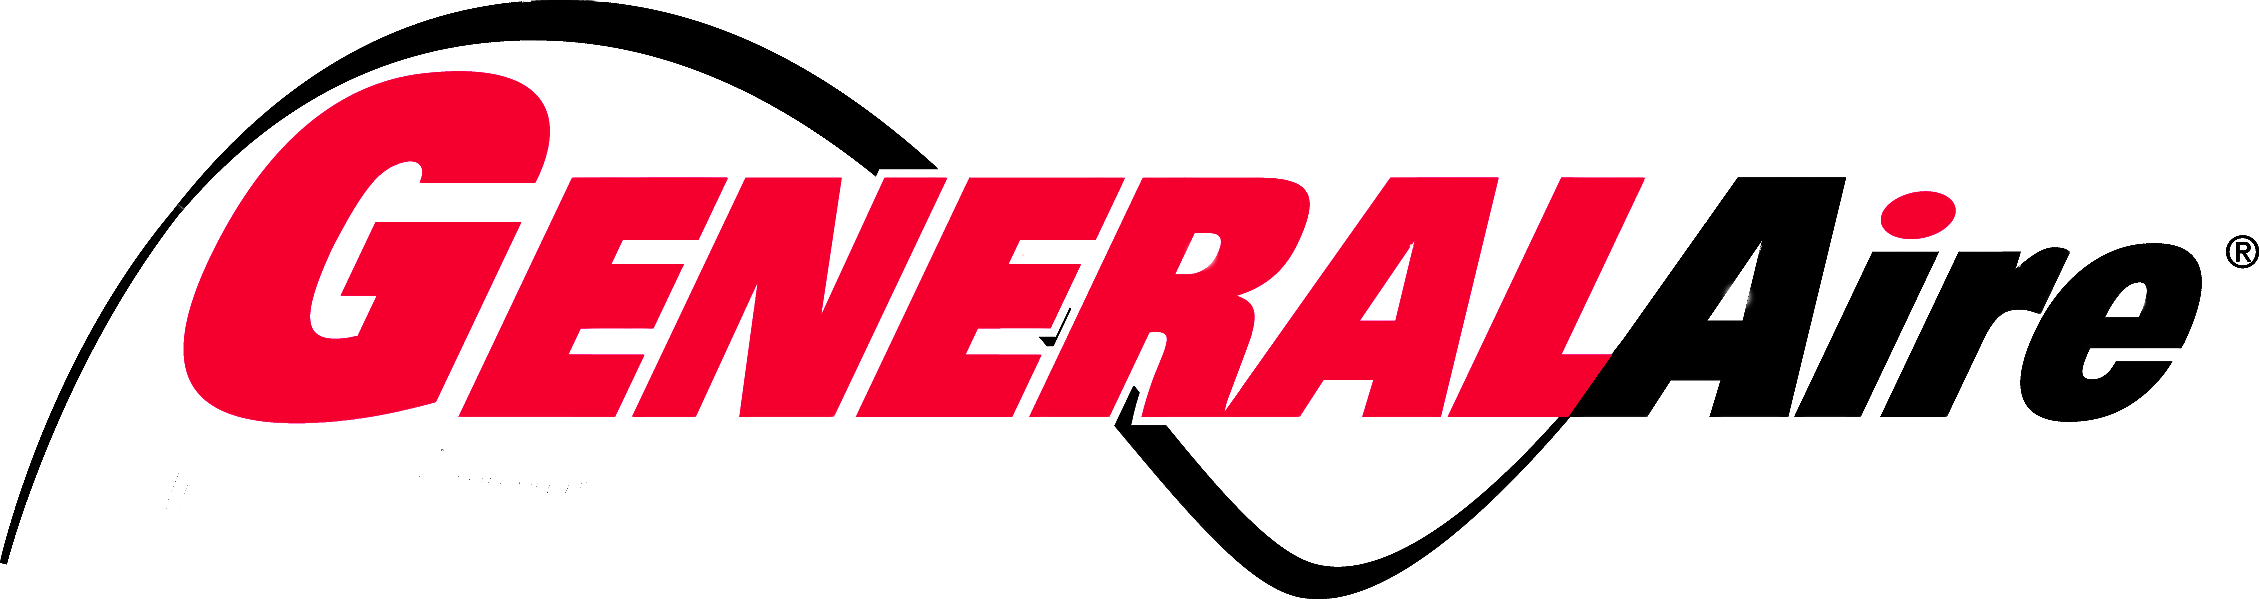 GeneralAire logo